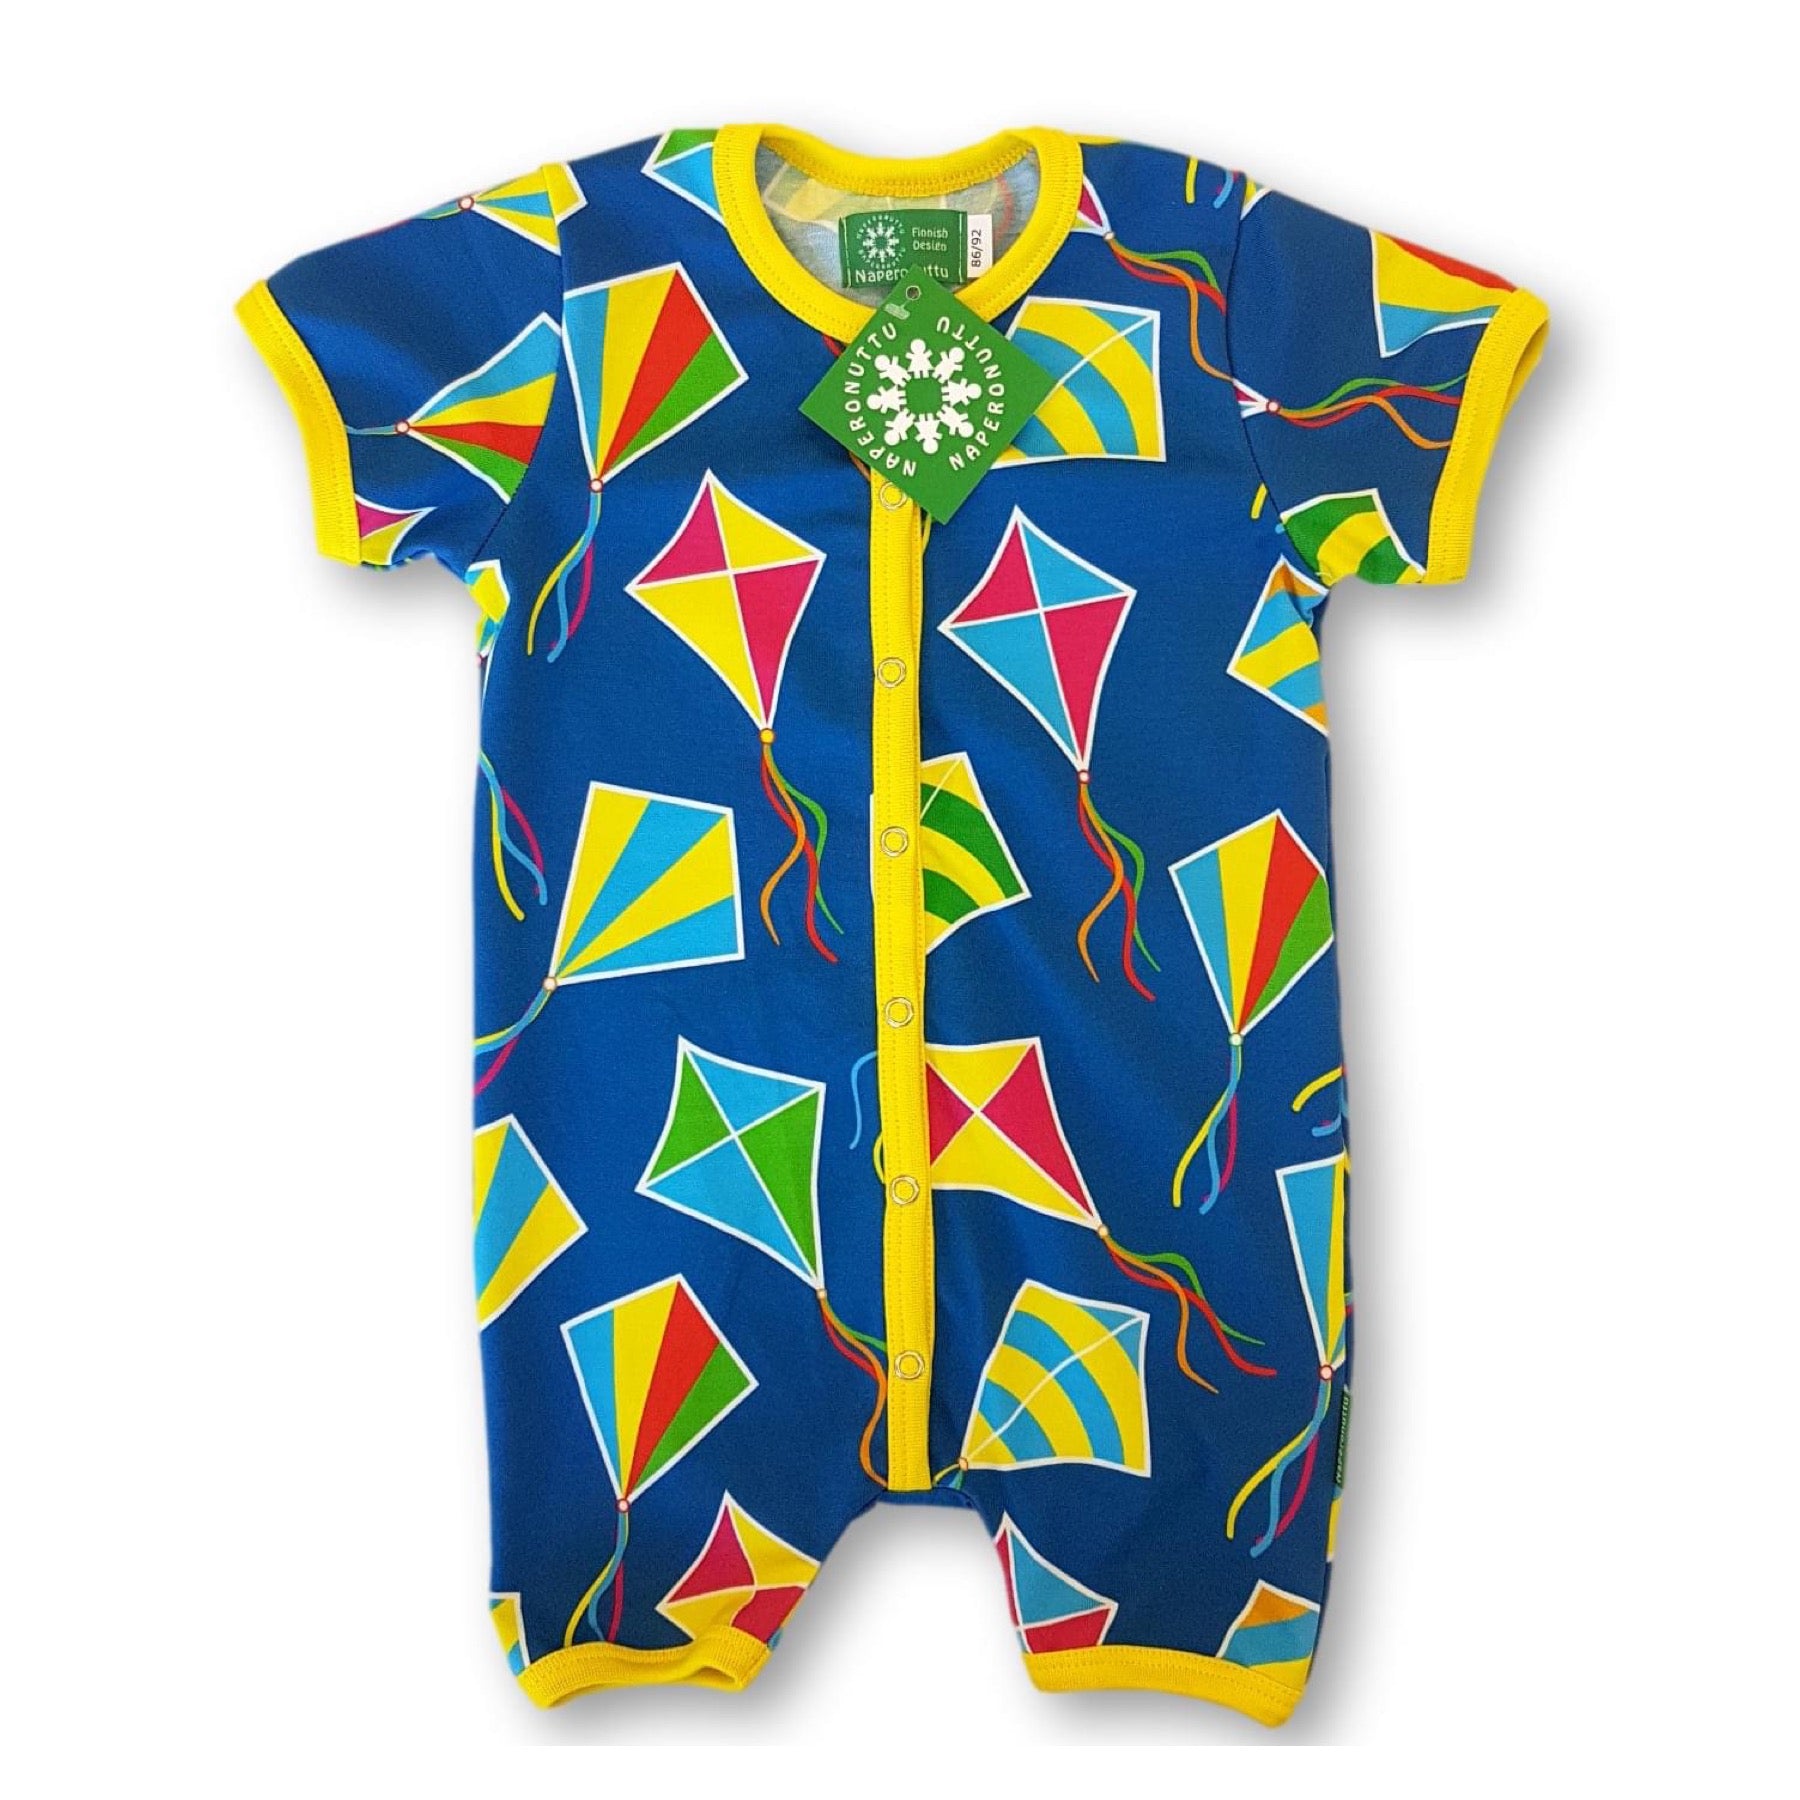 Naperonuttu Summer Suit Kites